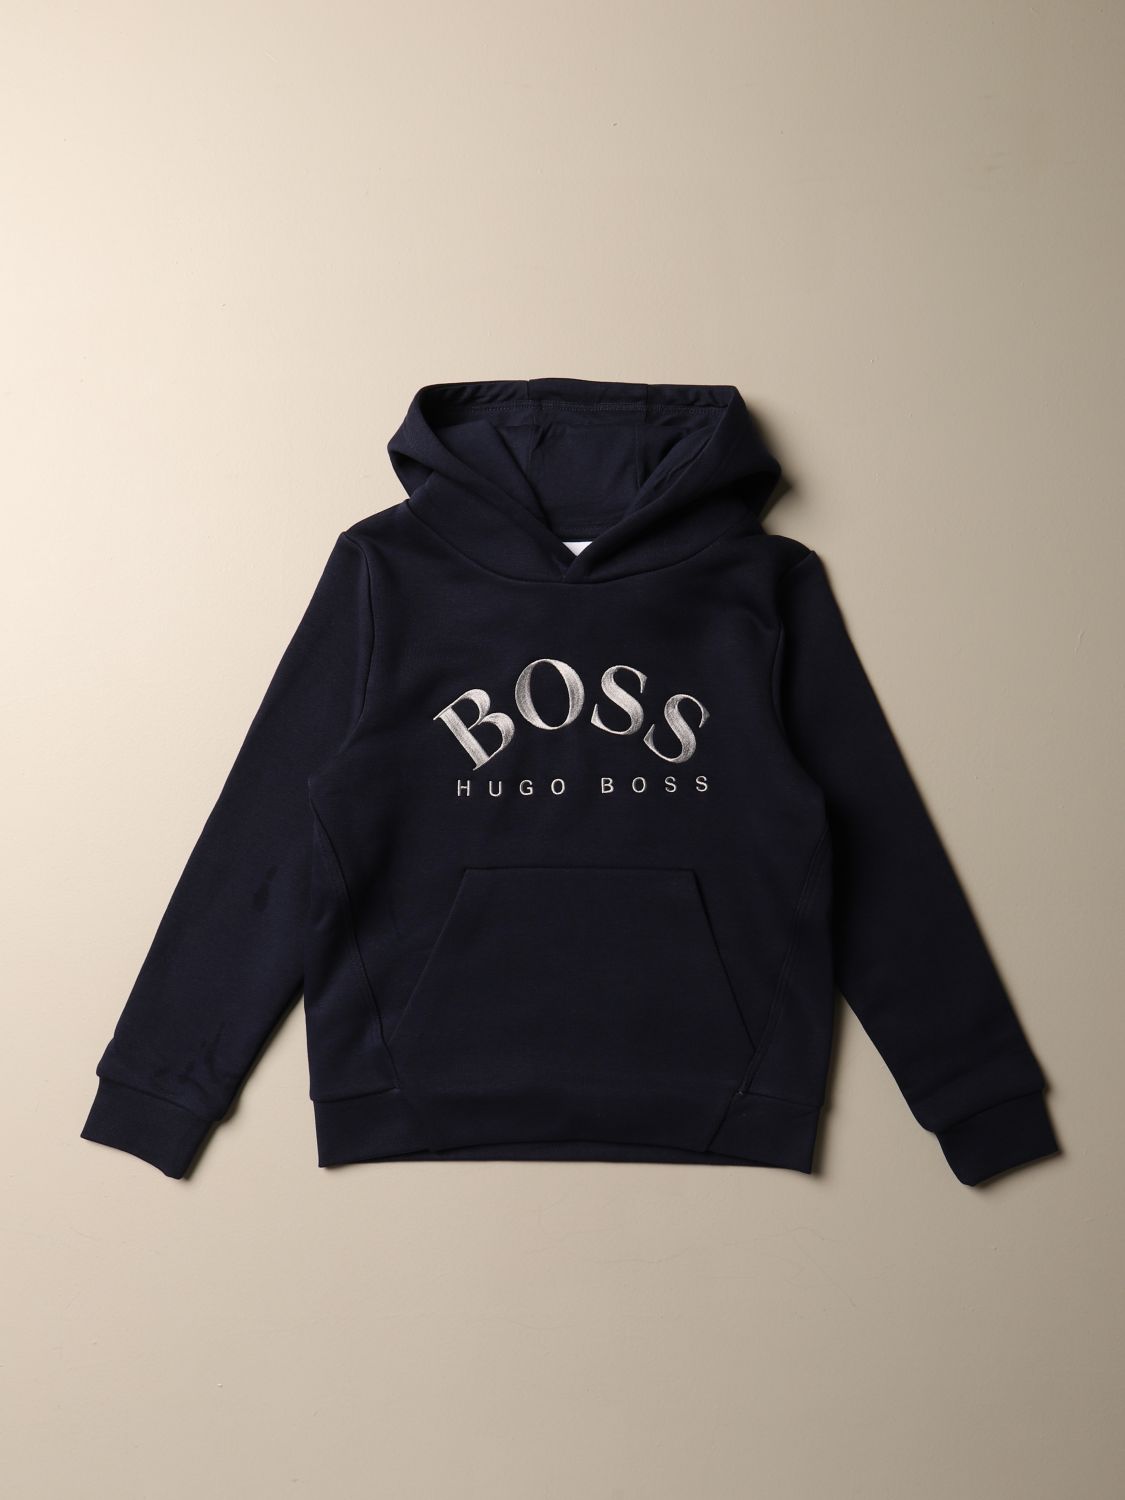 hugo boss blue sweatshirt